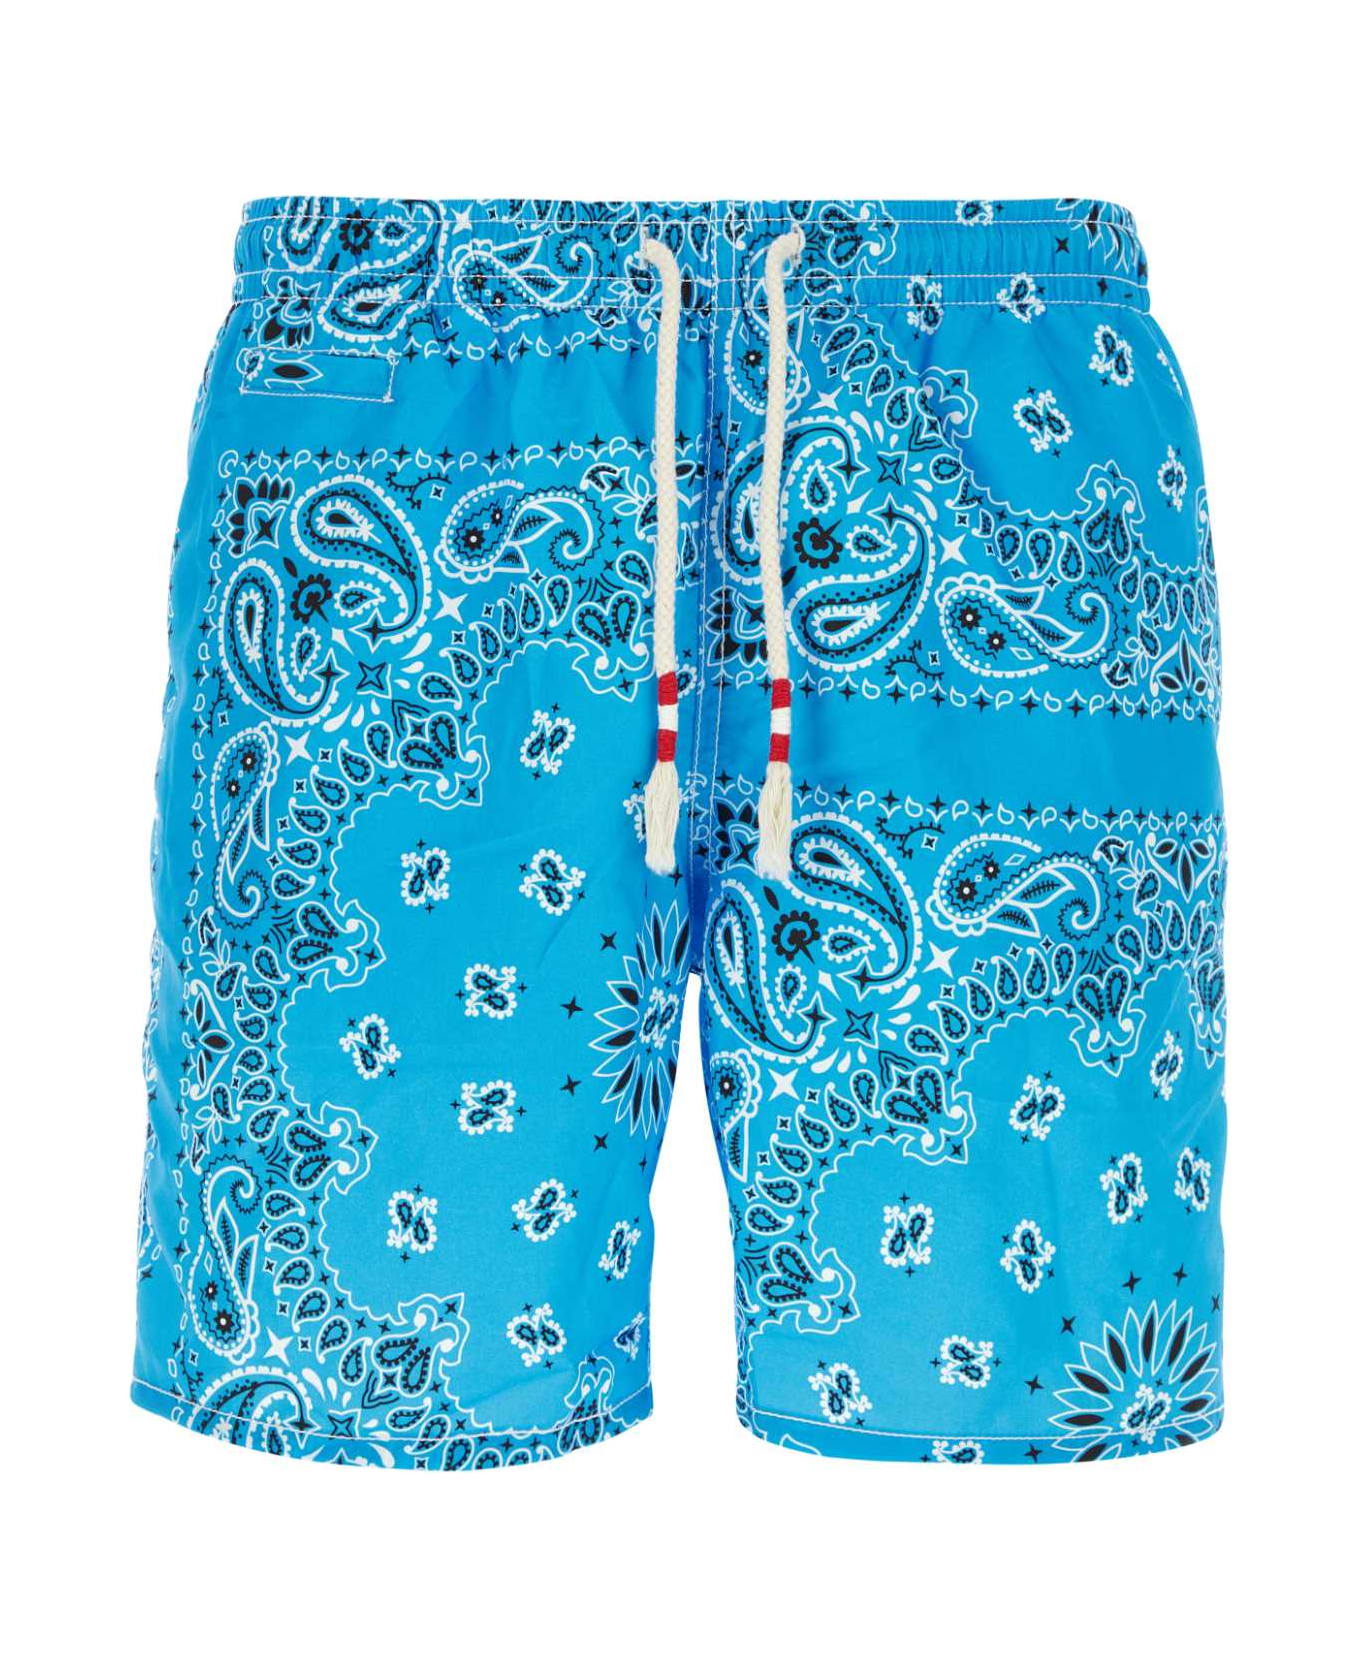 MC2 Saint Barth Printed Polyester Swimming Shorts - 3201 水着